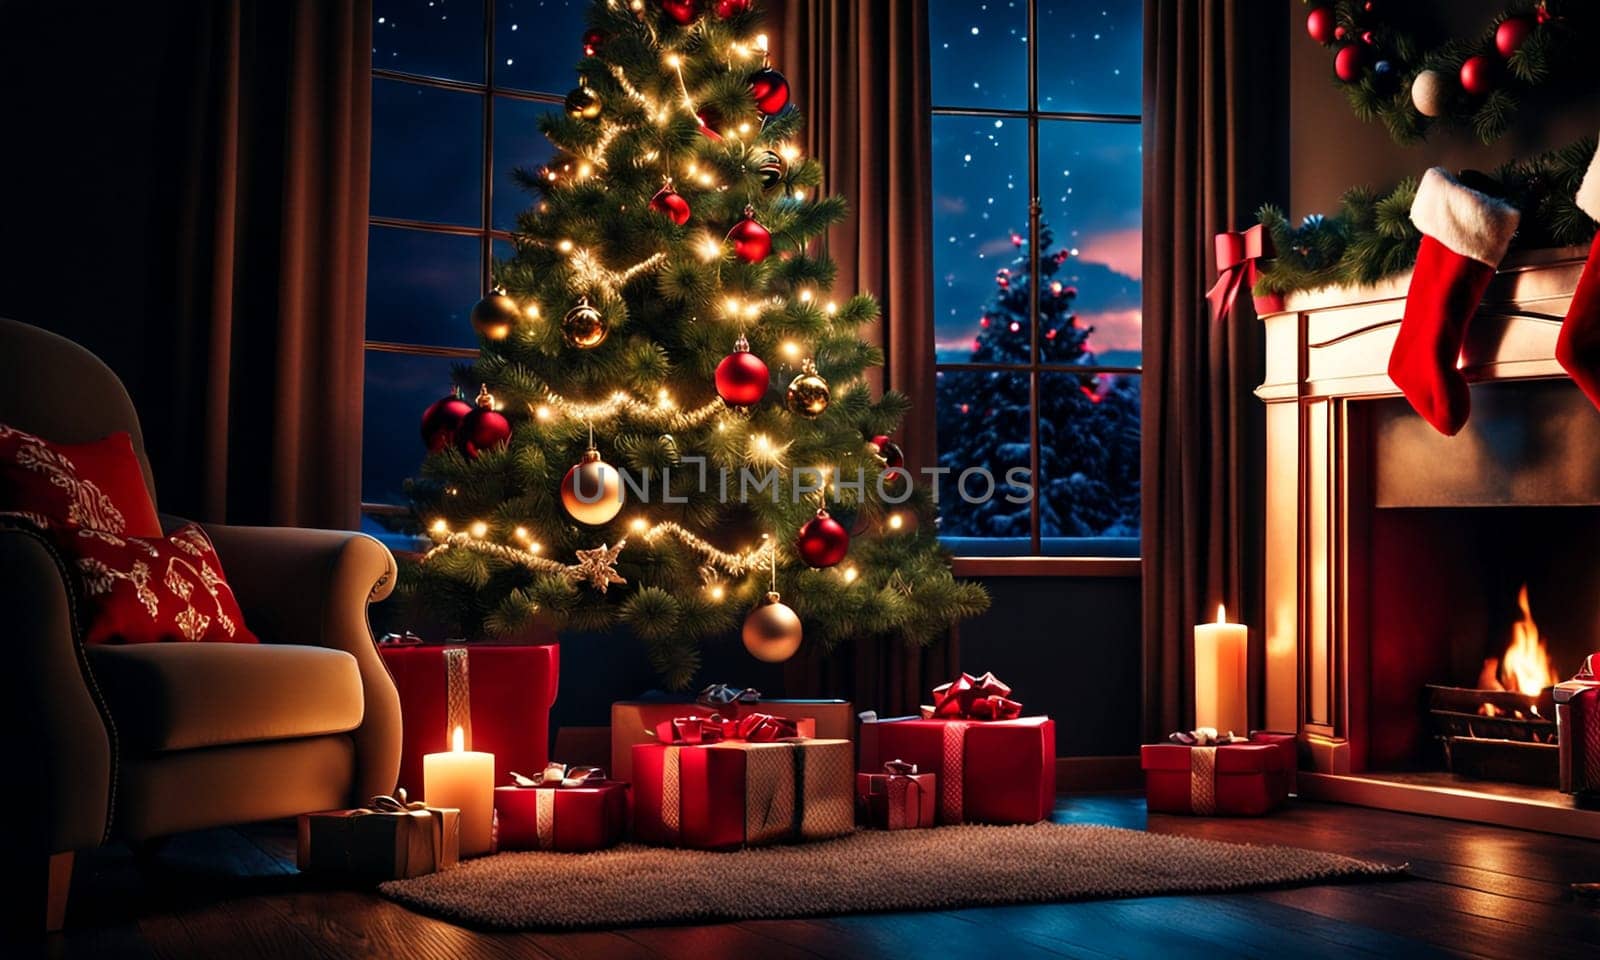 Beautiful Christmas card by NeuroSky